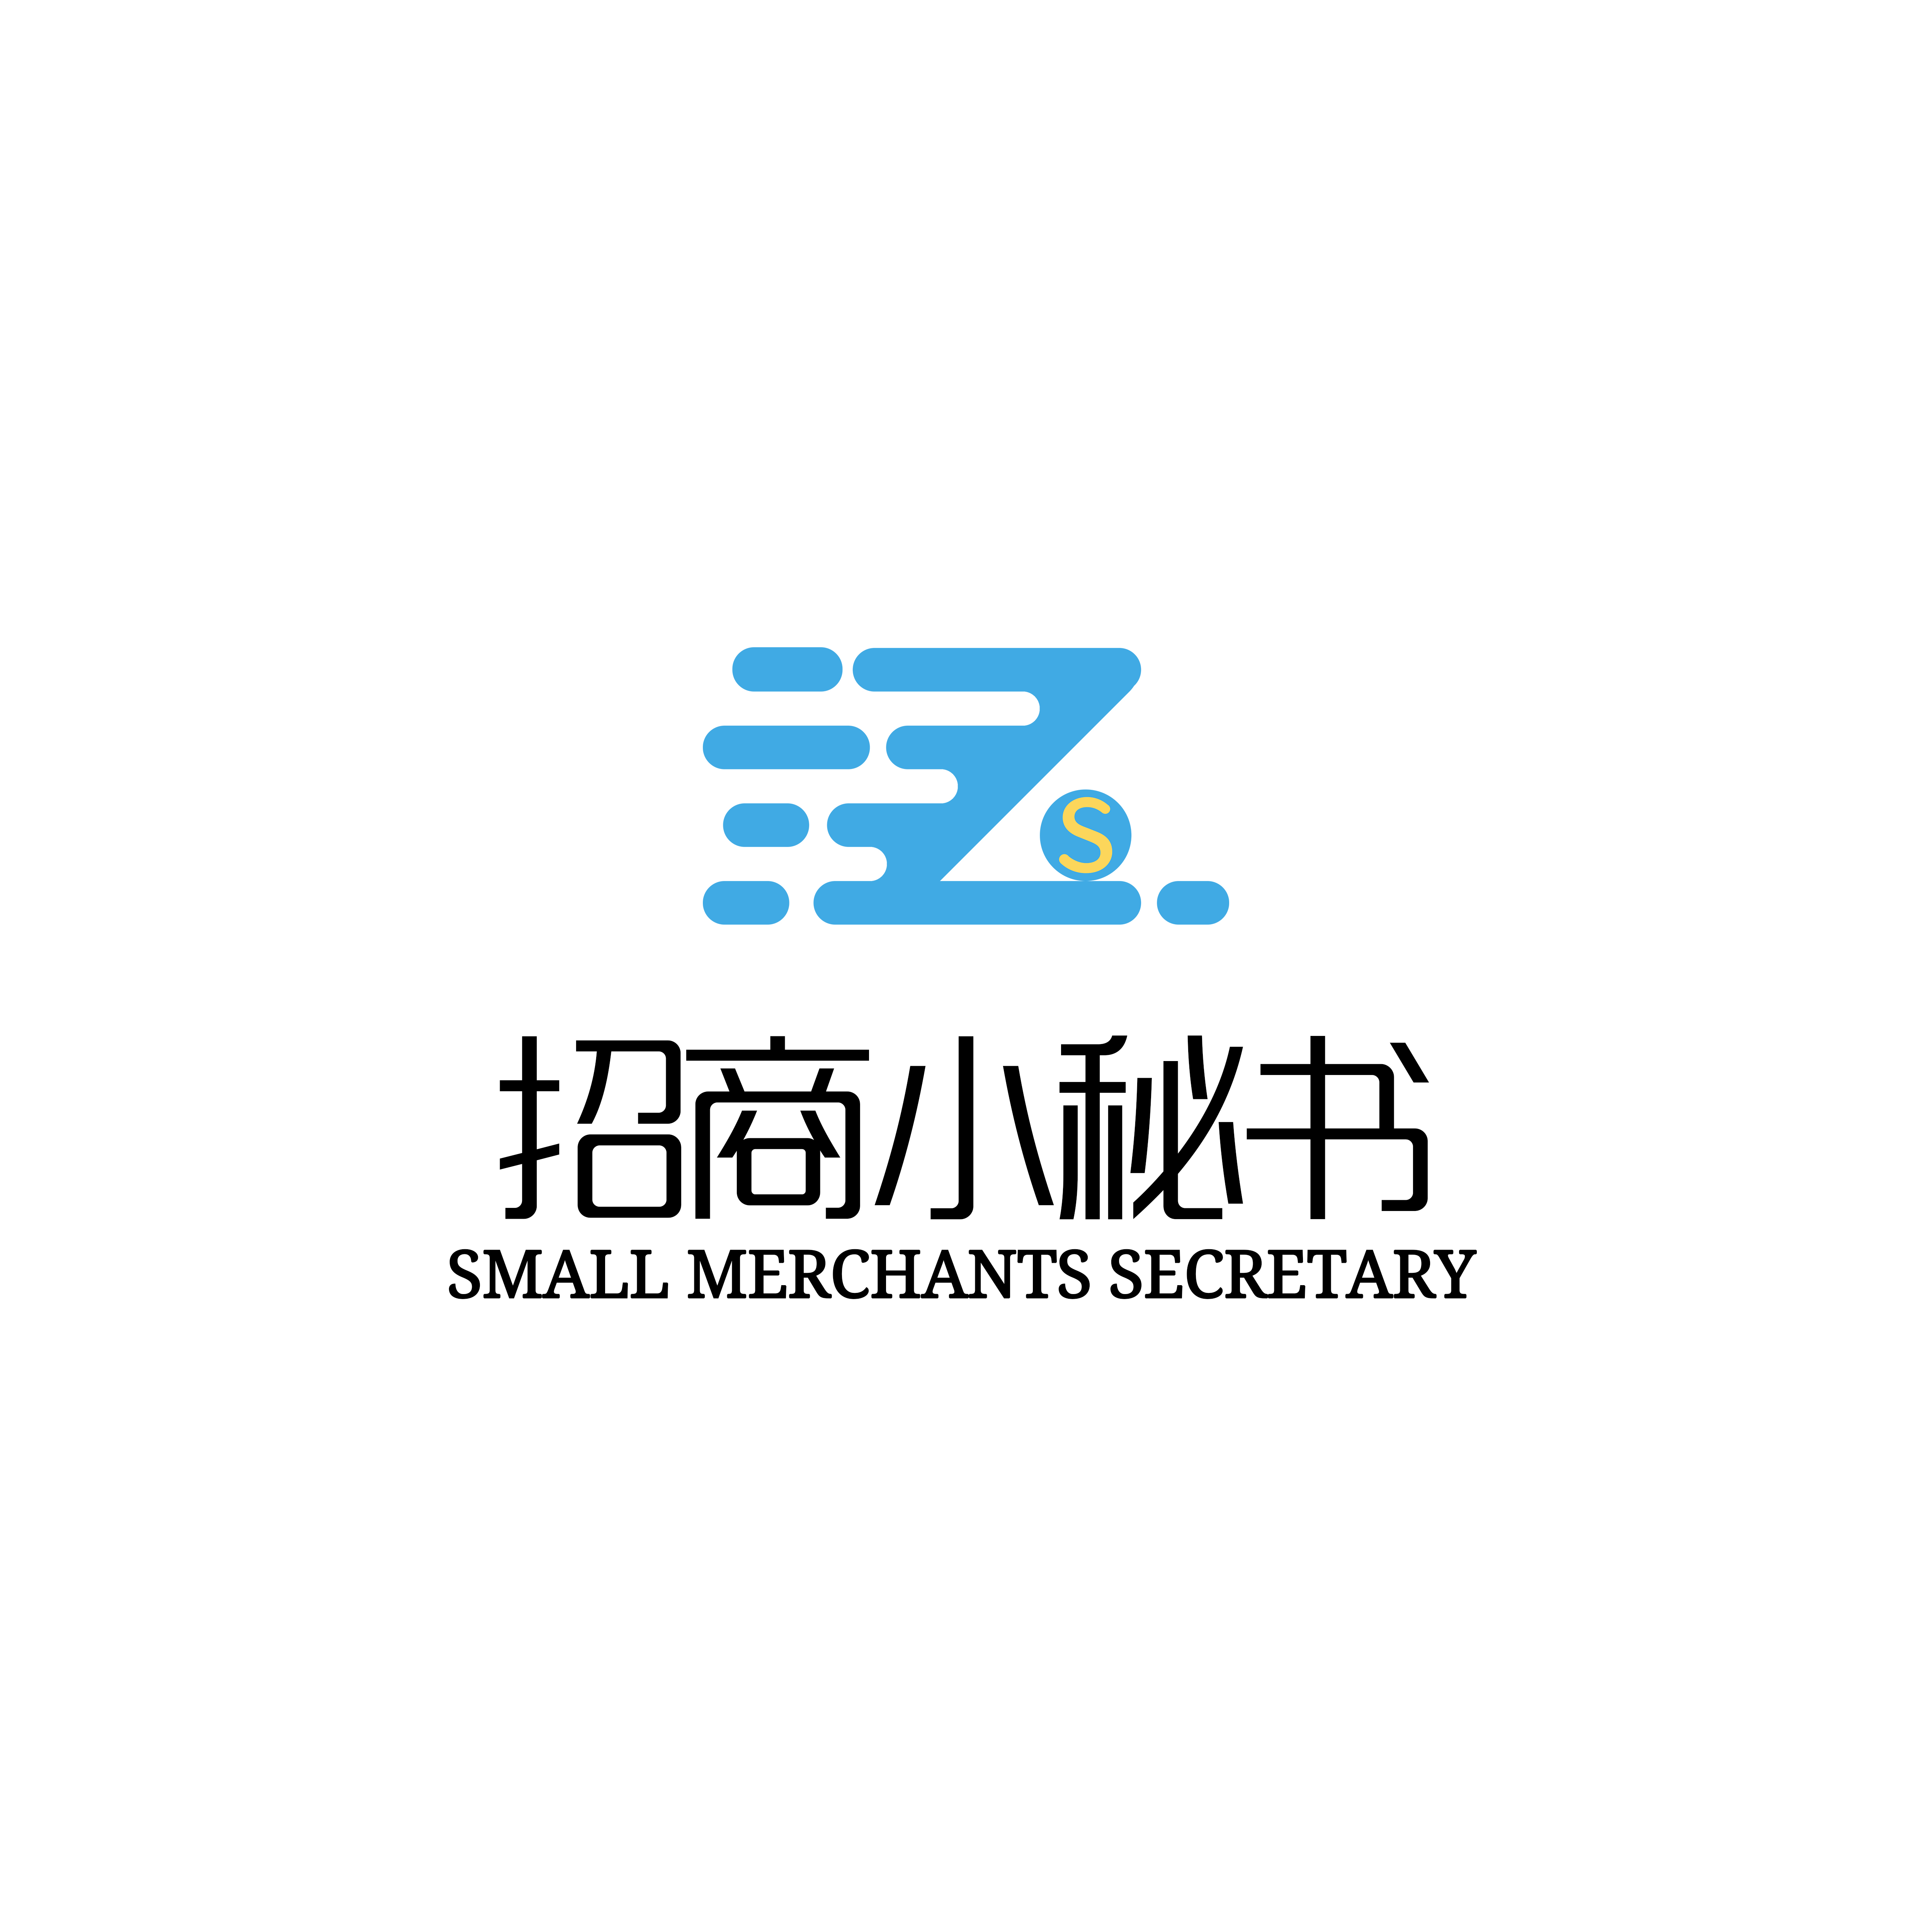 招商小秘书logo设计